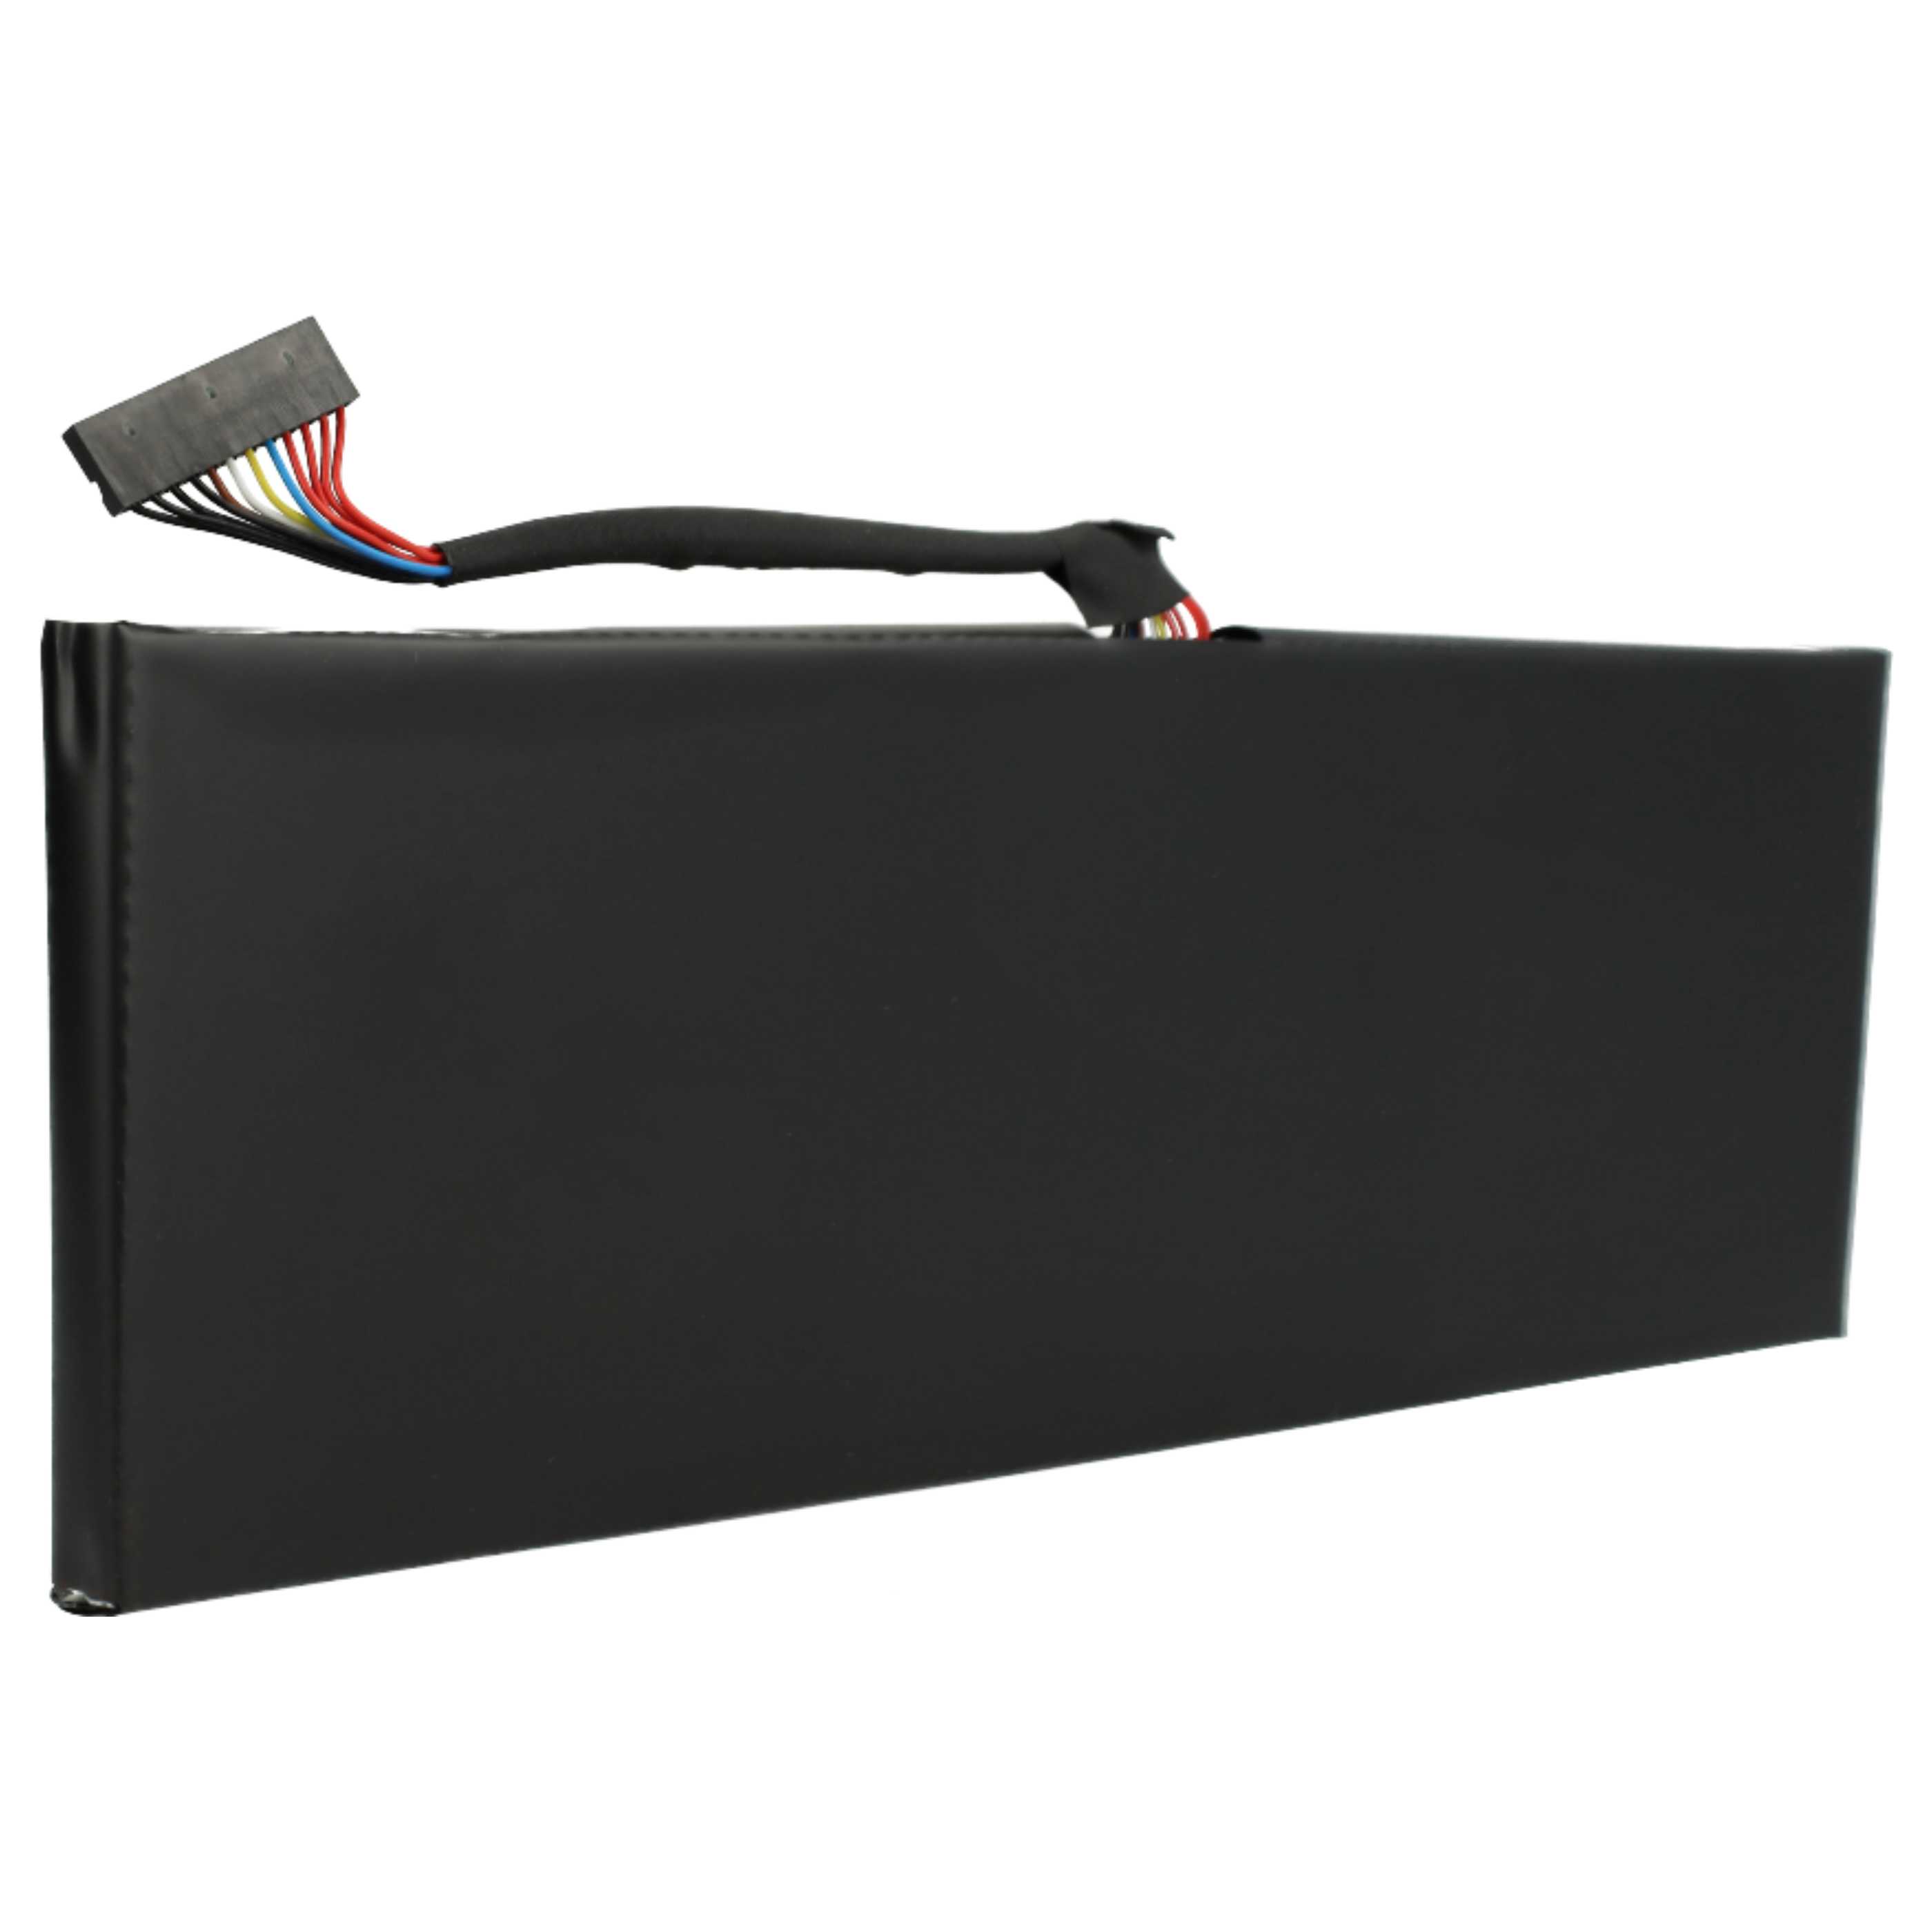 Akumulator do laptopa zamiennik MSI BTY-M47, BTY-M47(2ICP5/73/95-2) - 8060 mAh 7,6 V Li-Ion, czarny